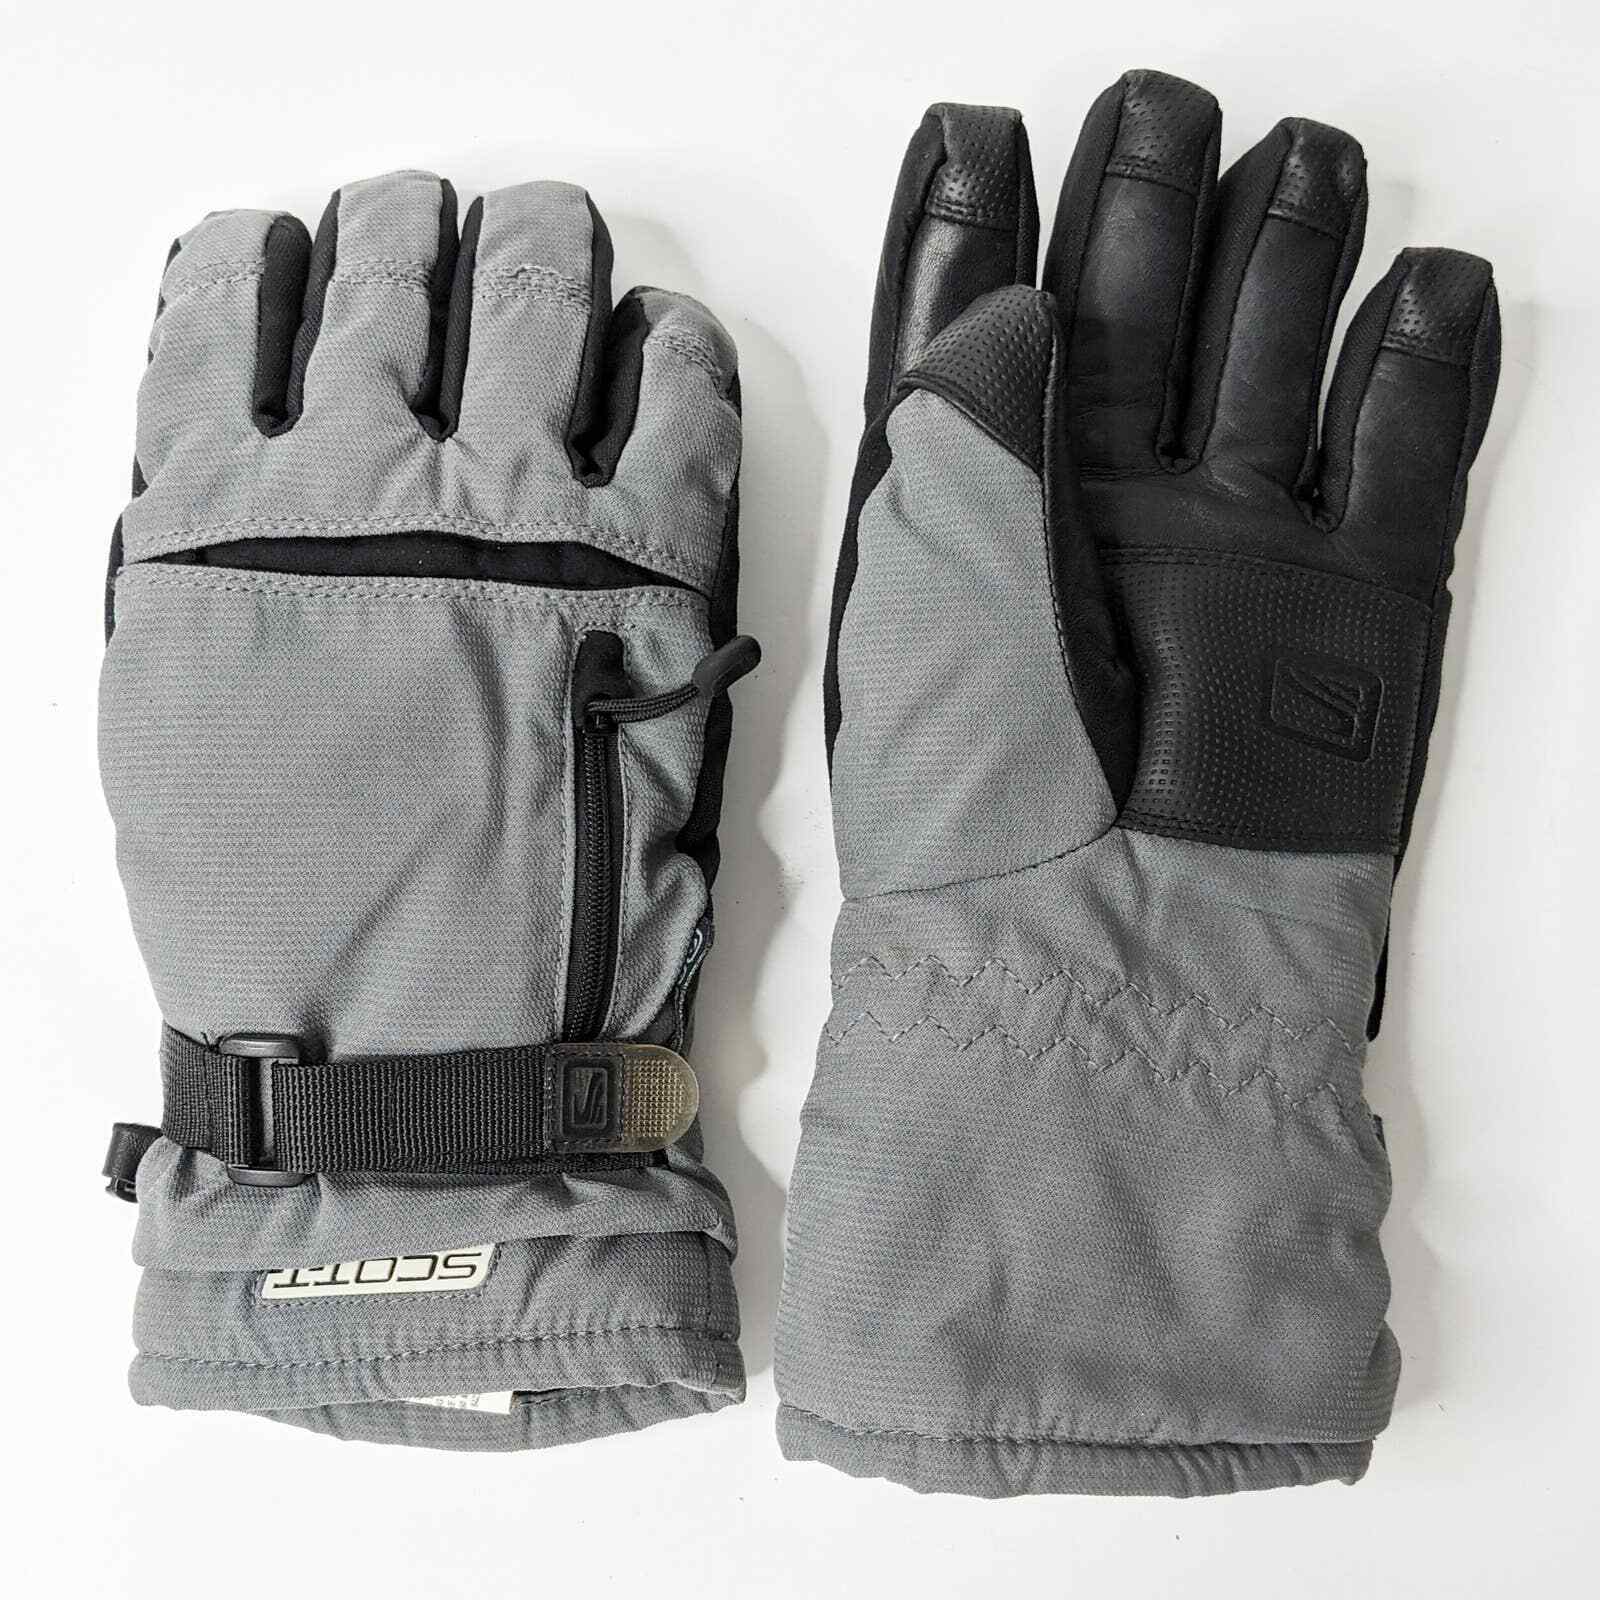 Scott Winter Ski Gloves Waterproof Breathable Gray Black Preowned Women's Small